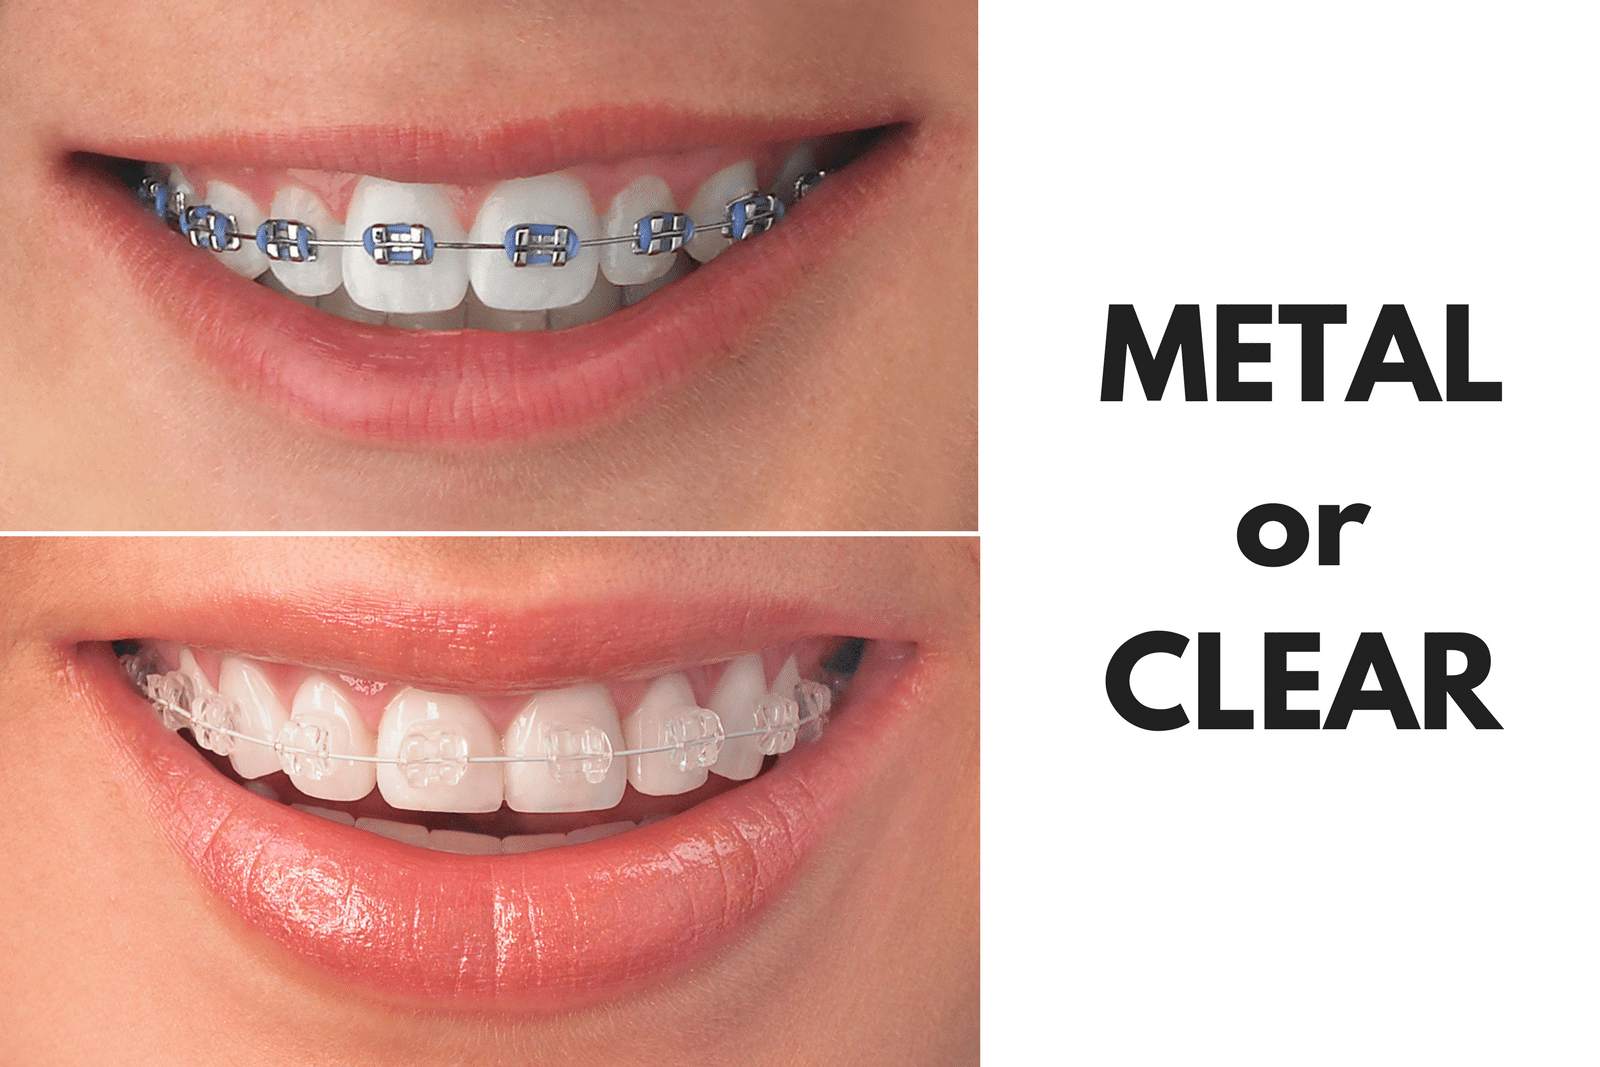 Ask Your Golden Crescent Dentist: Should I Get Metal or Clear Braces?